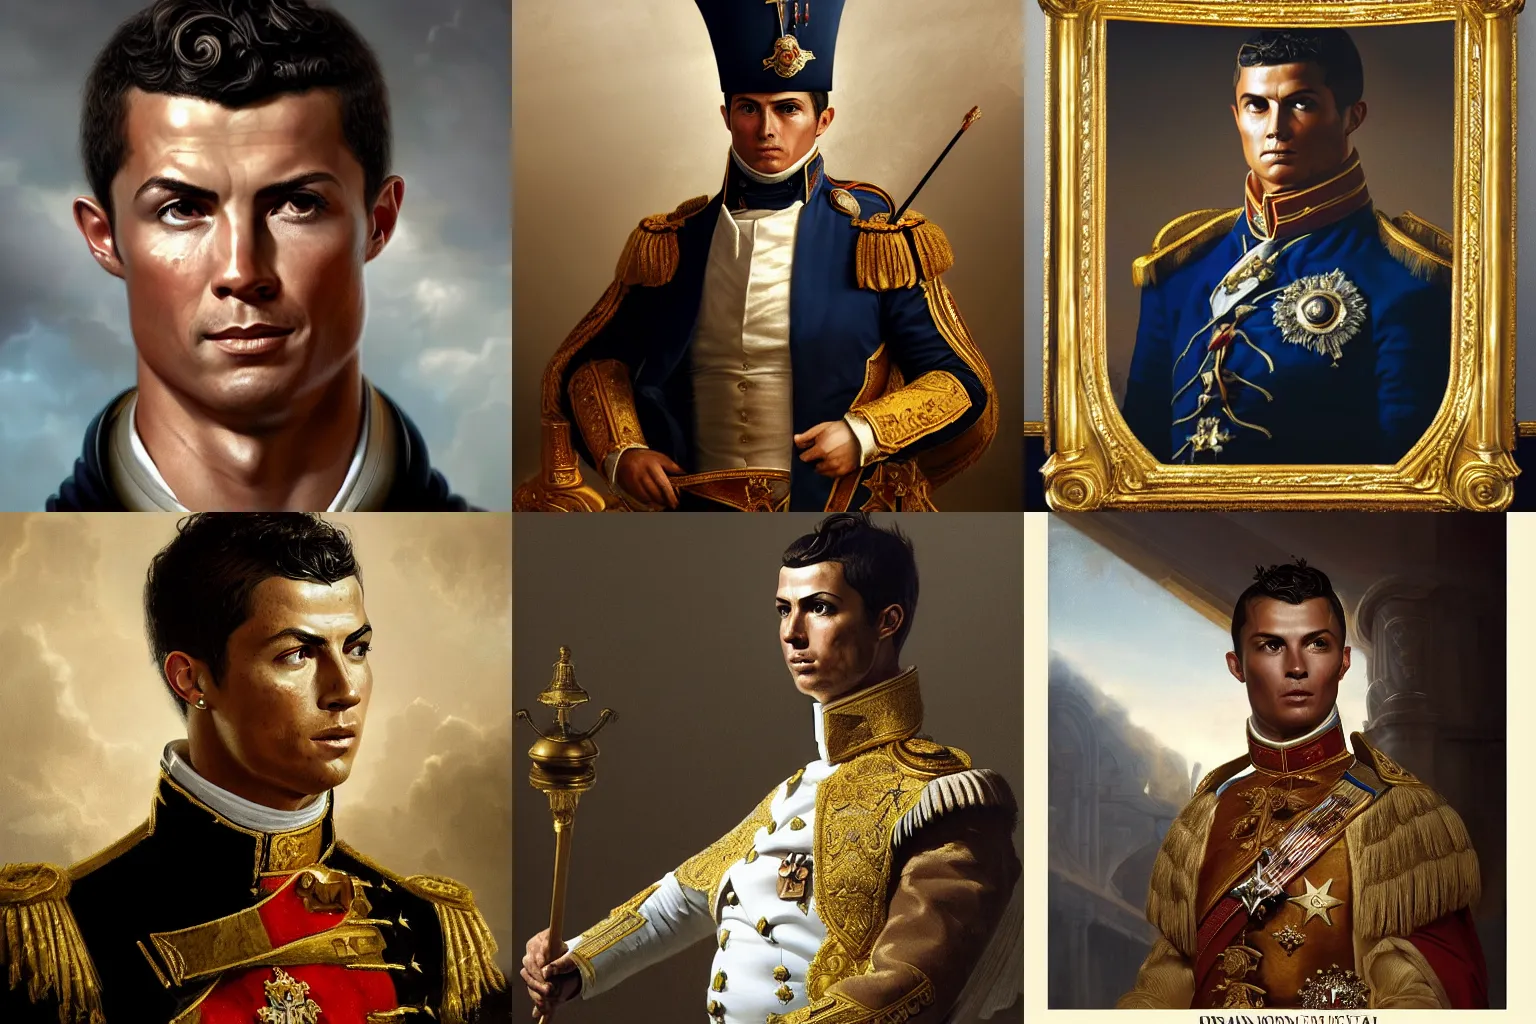 Image similar to Portrait of Cristiano Ronaldo as Emperor Napoleon, stunning screensaver, screensaver, head slightly tilted, natural light, elegant, intricate, fantasy, atmospheric lighting, cinematic, matte painting, Greg Rutkowski